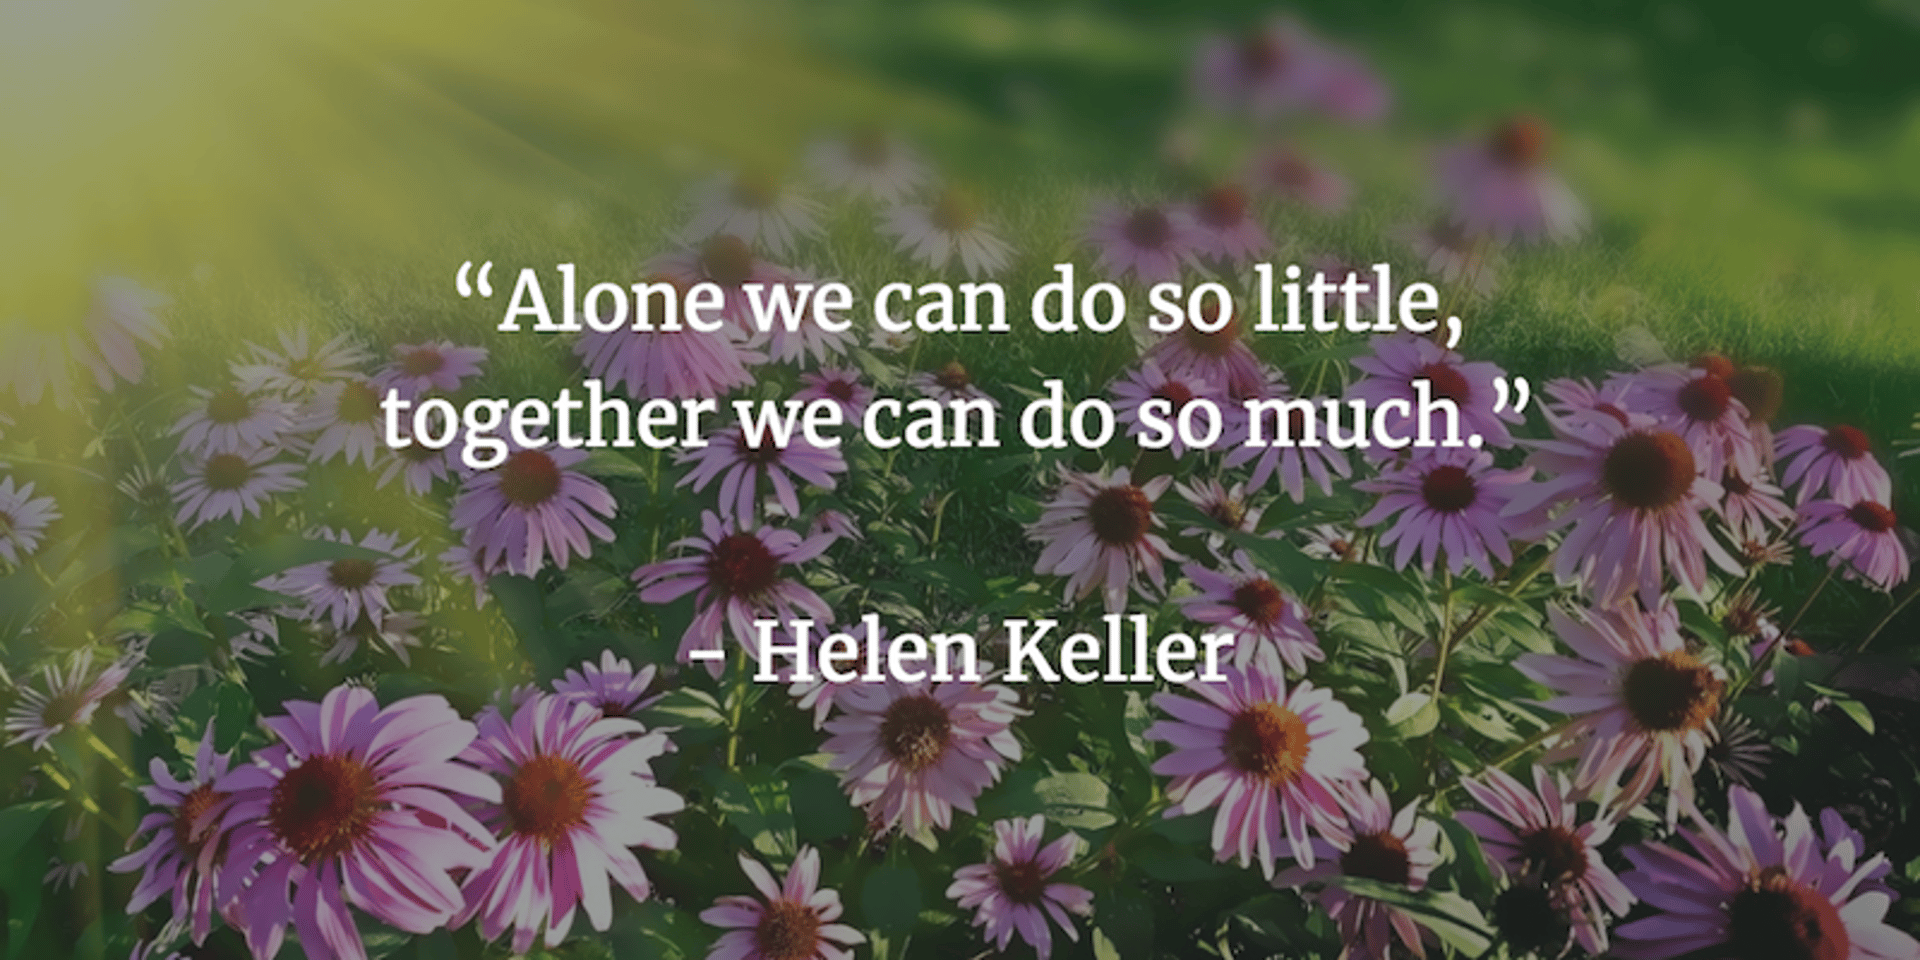 Helen Keller Working Together Team Building Quote